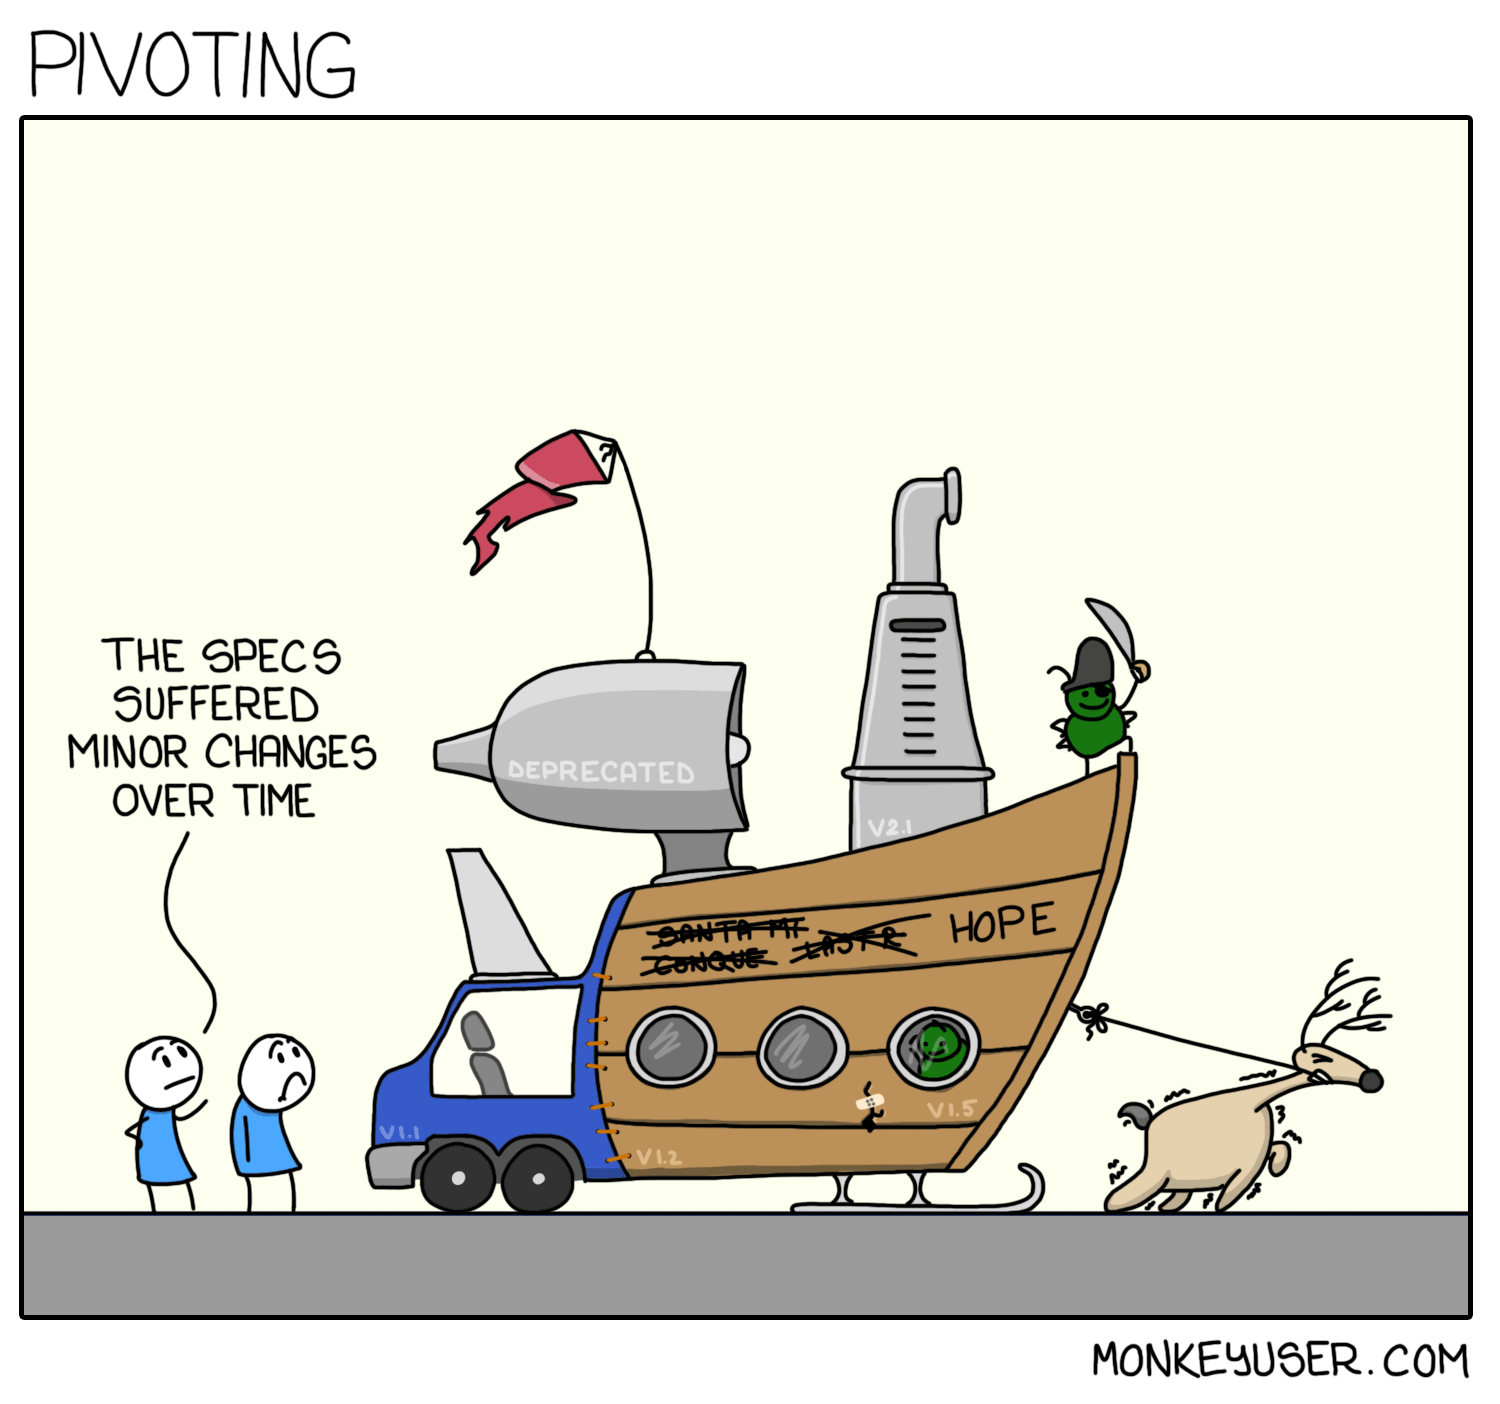 Pivoting